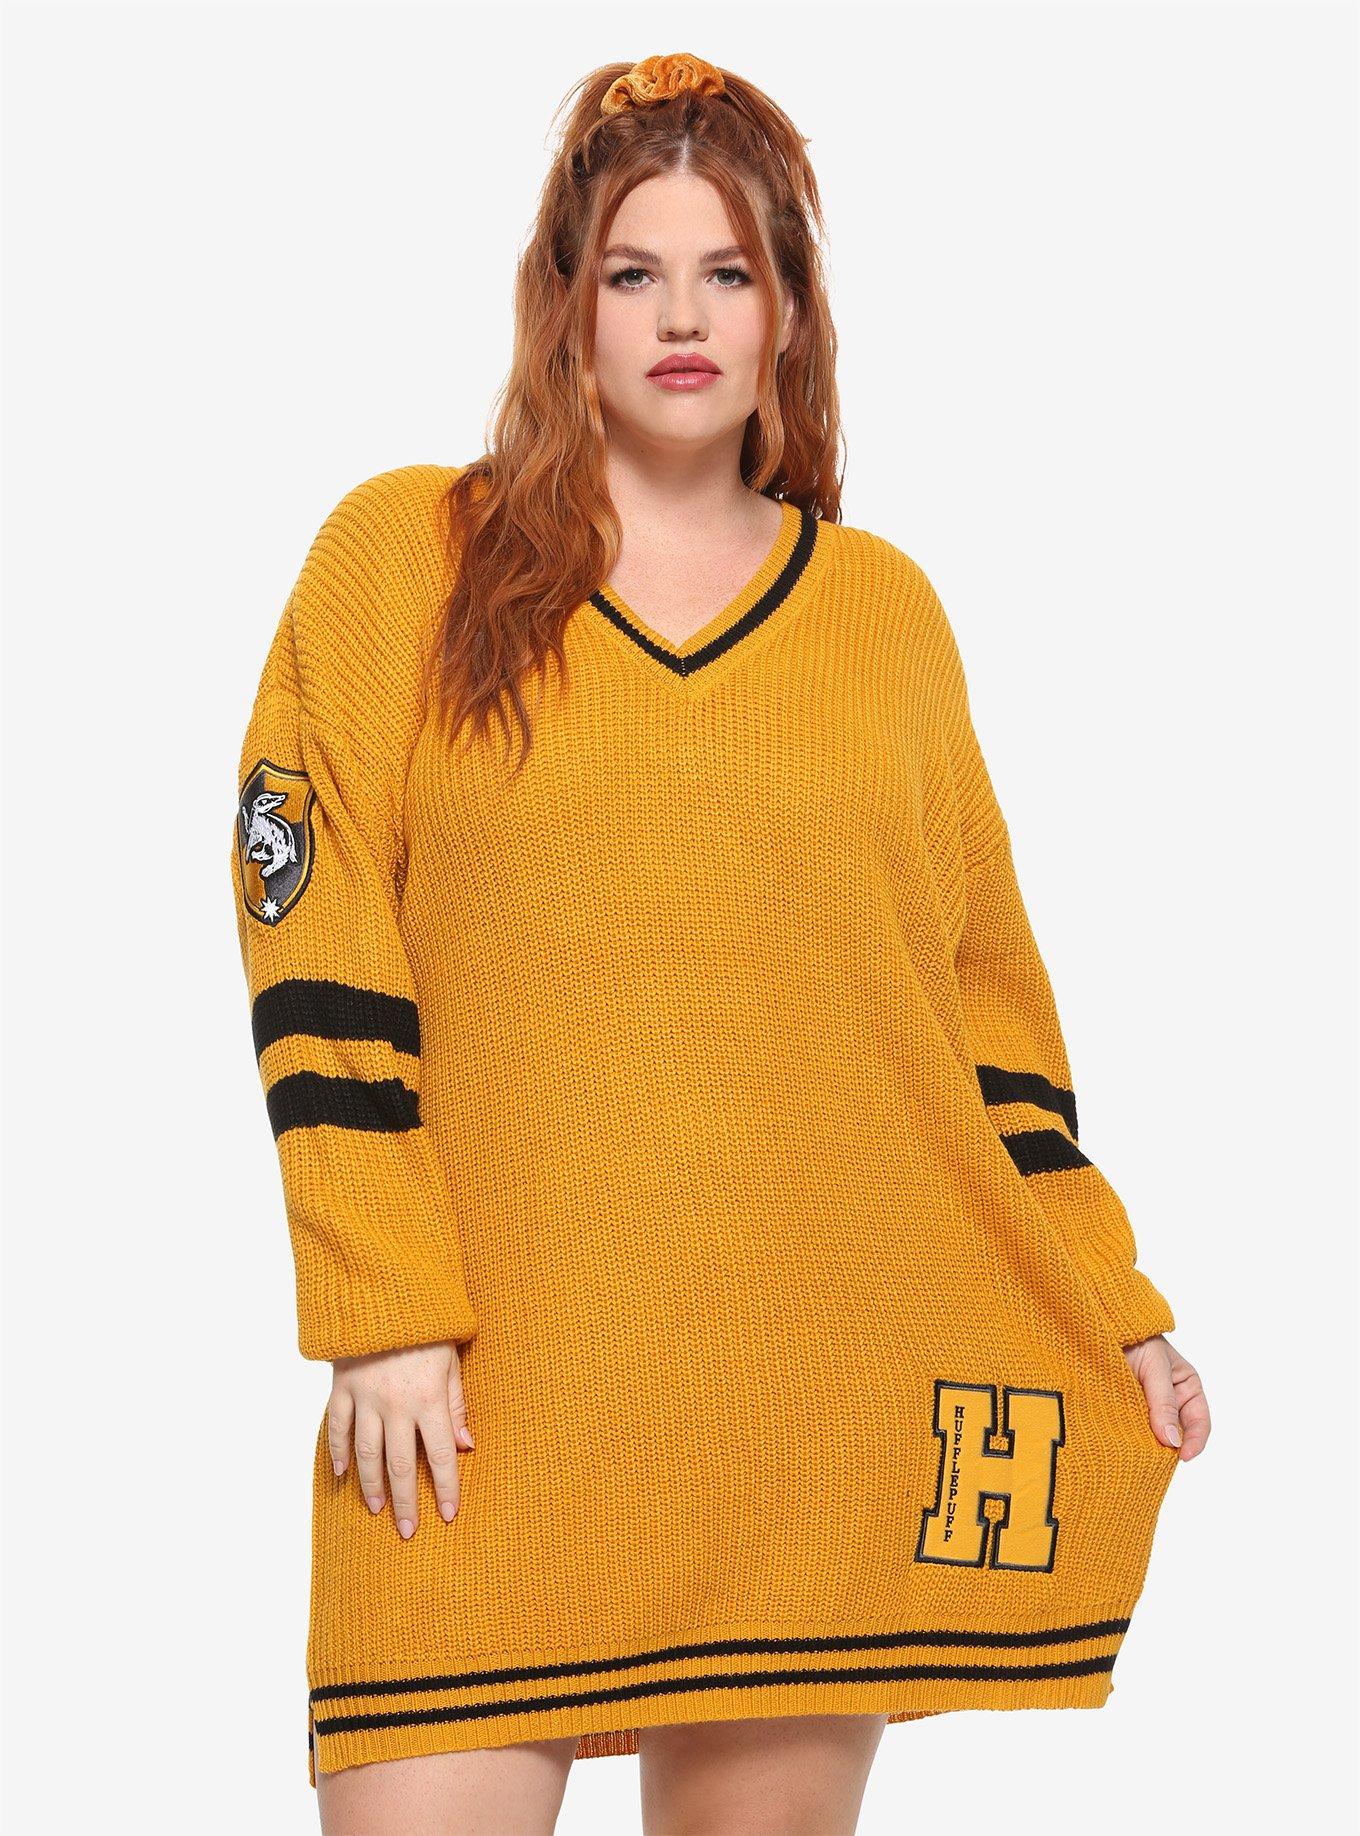 Harry Potter Hufflepuff Sweater Dress Plus Size, YELLOW, hi-res